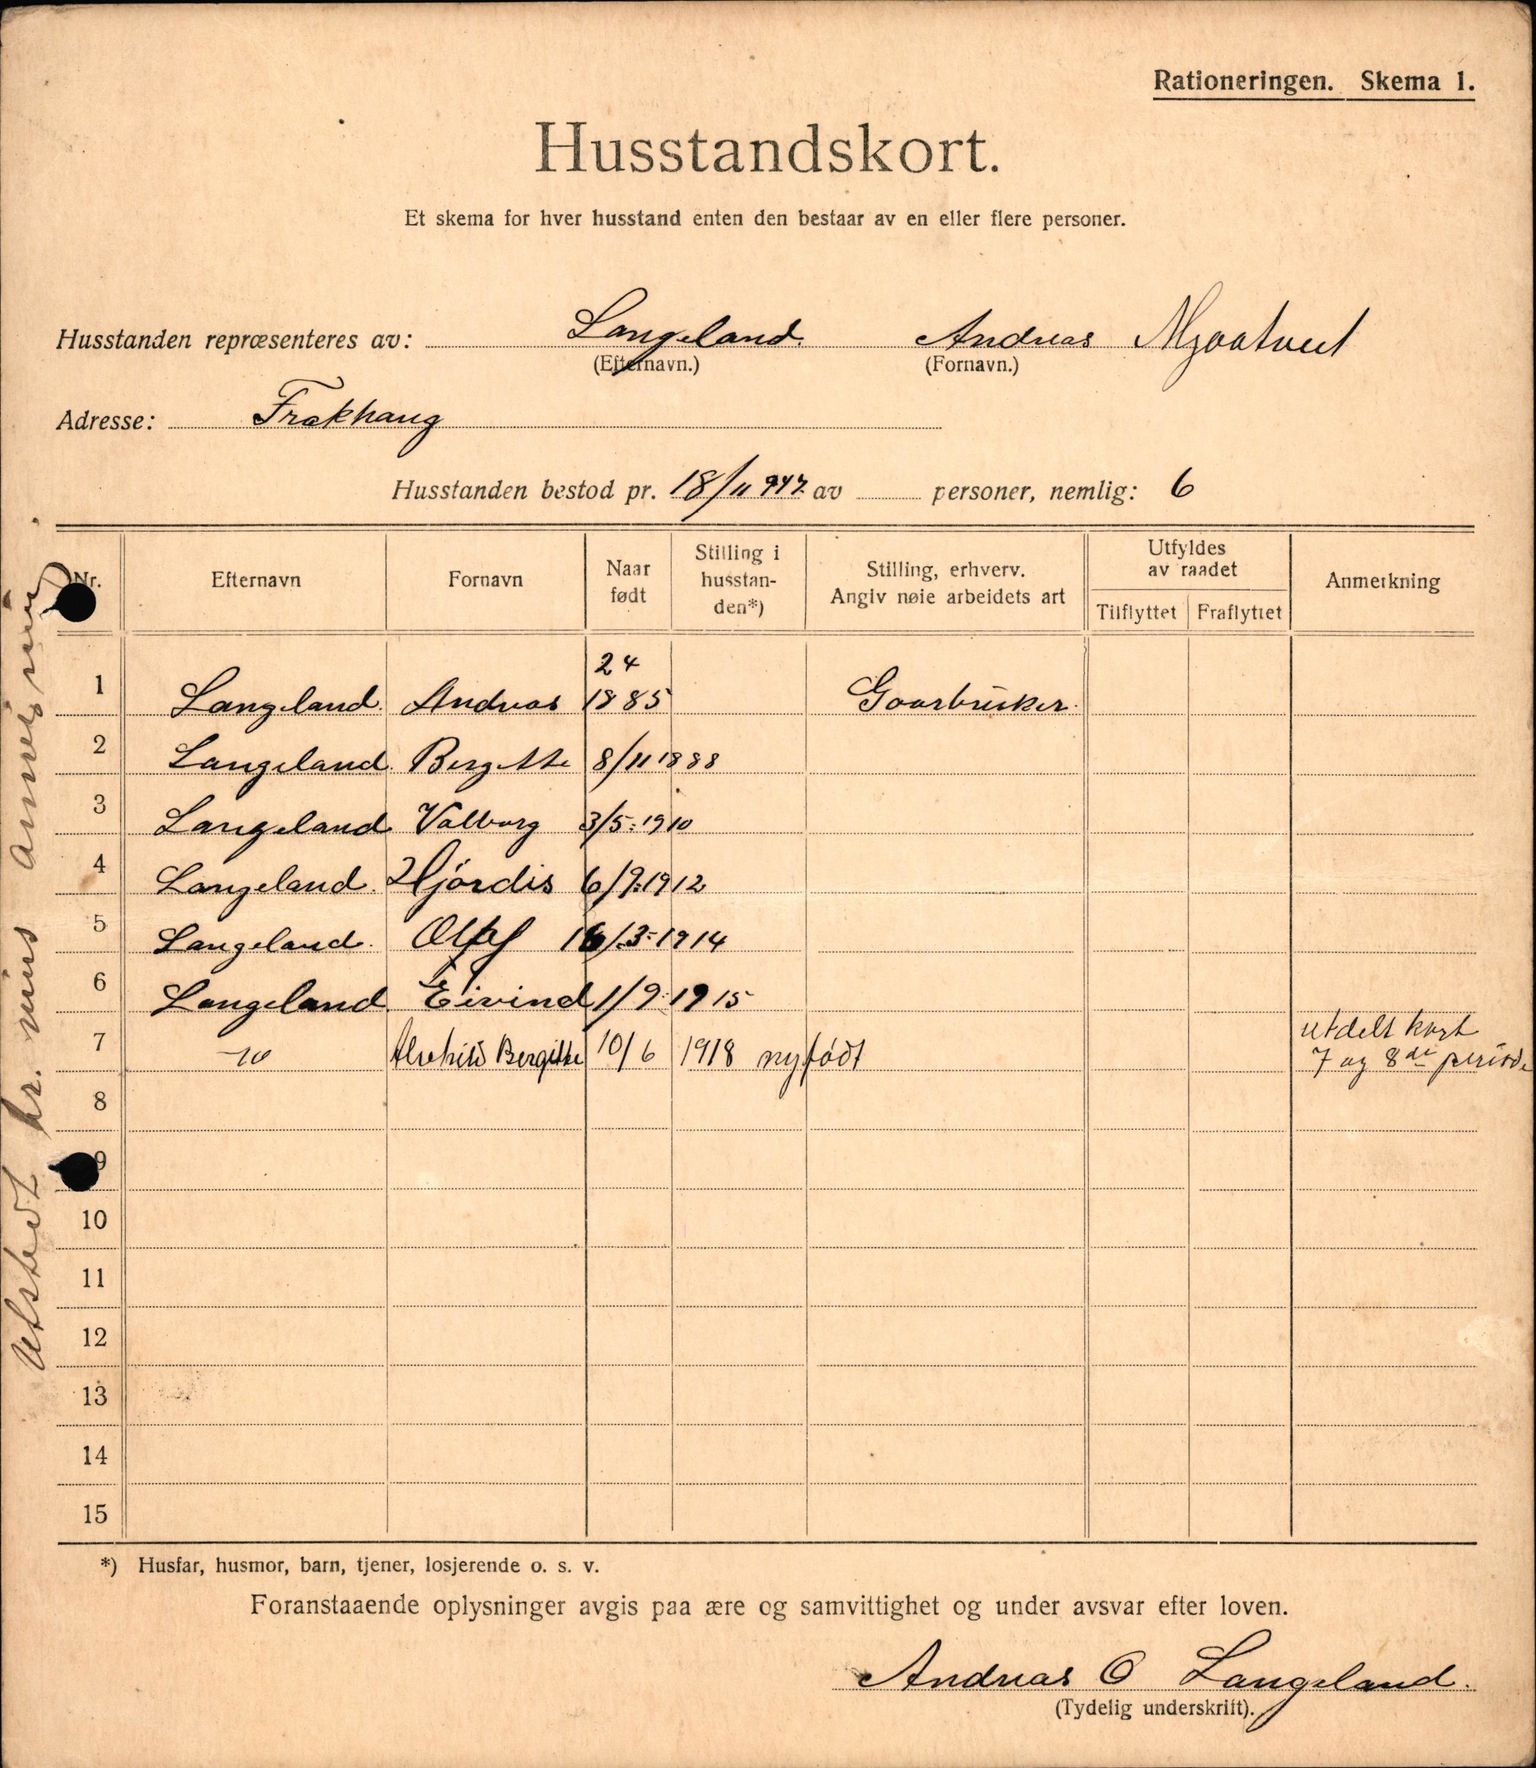 IKAH, Meland kommune, Provianteringsrådet, Husstander per 01.11.1917, 1917-1918, s. 159